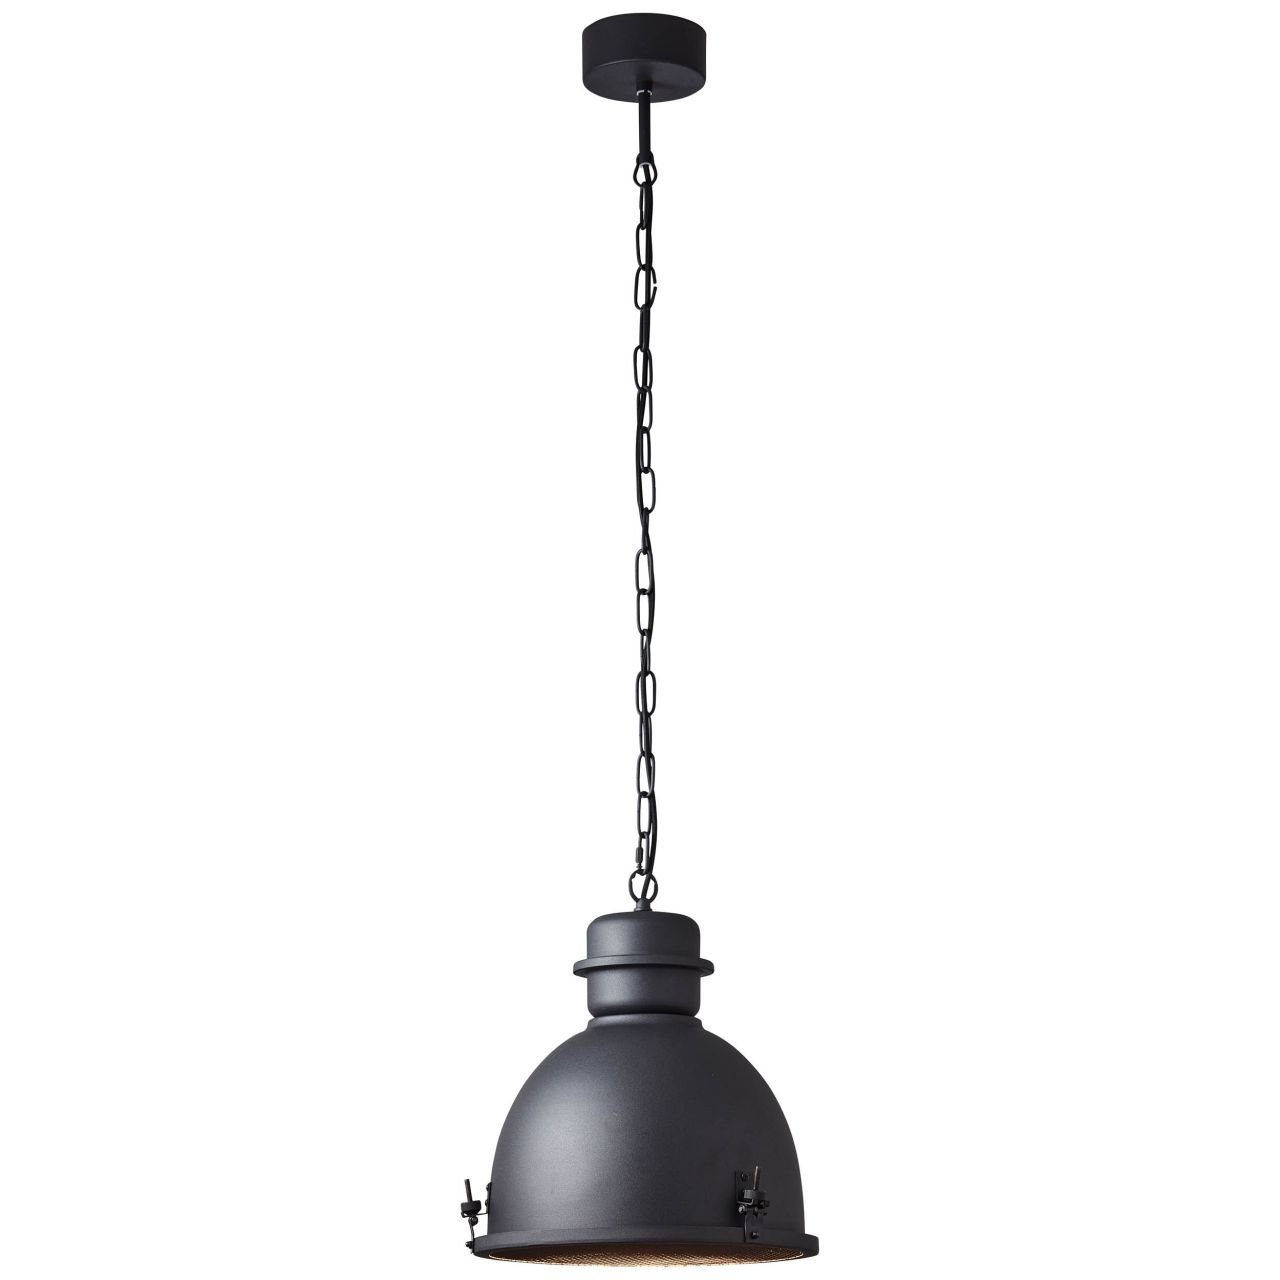 Brilliant Pendelleuchte Kiki, Pendelleuchte 35cm Lampe, schwarz Metall, A60, 1x 52 Kiki E27, korund